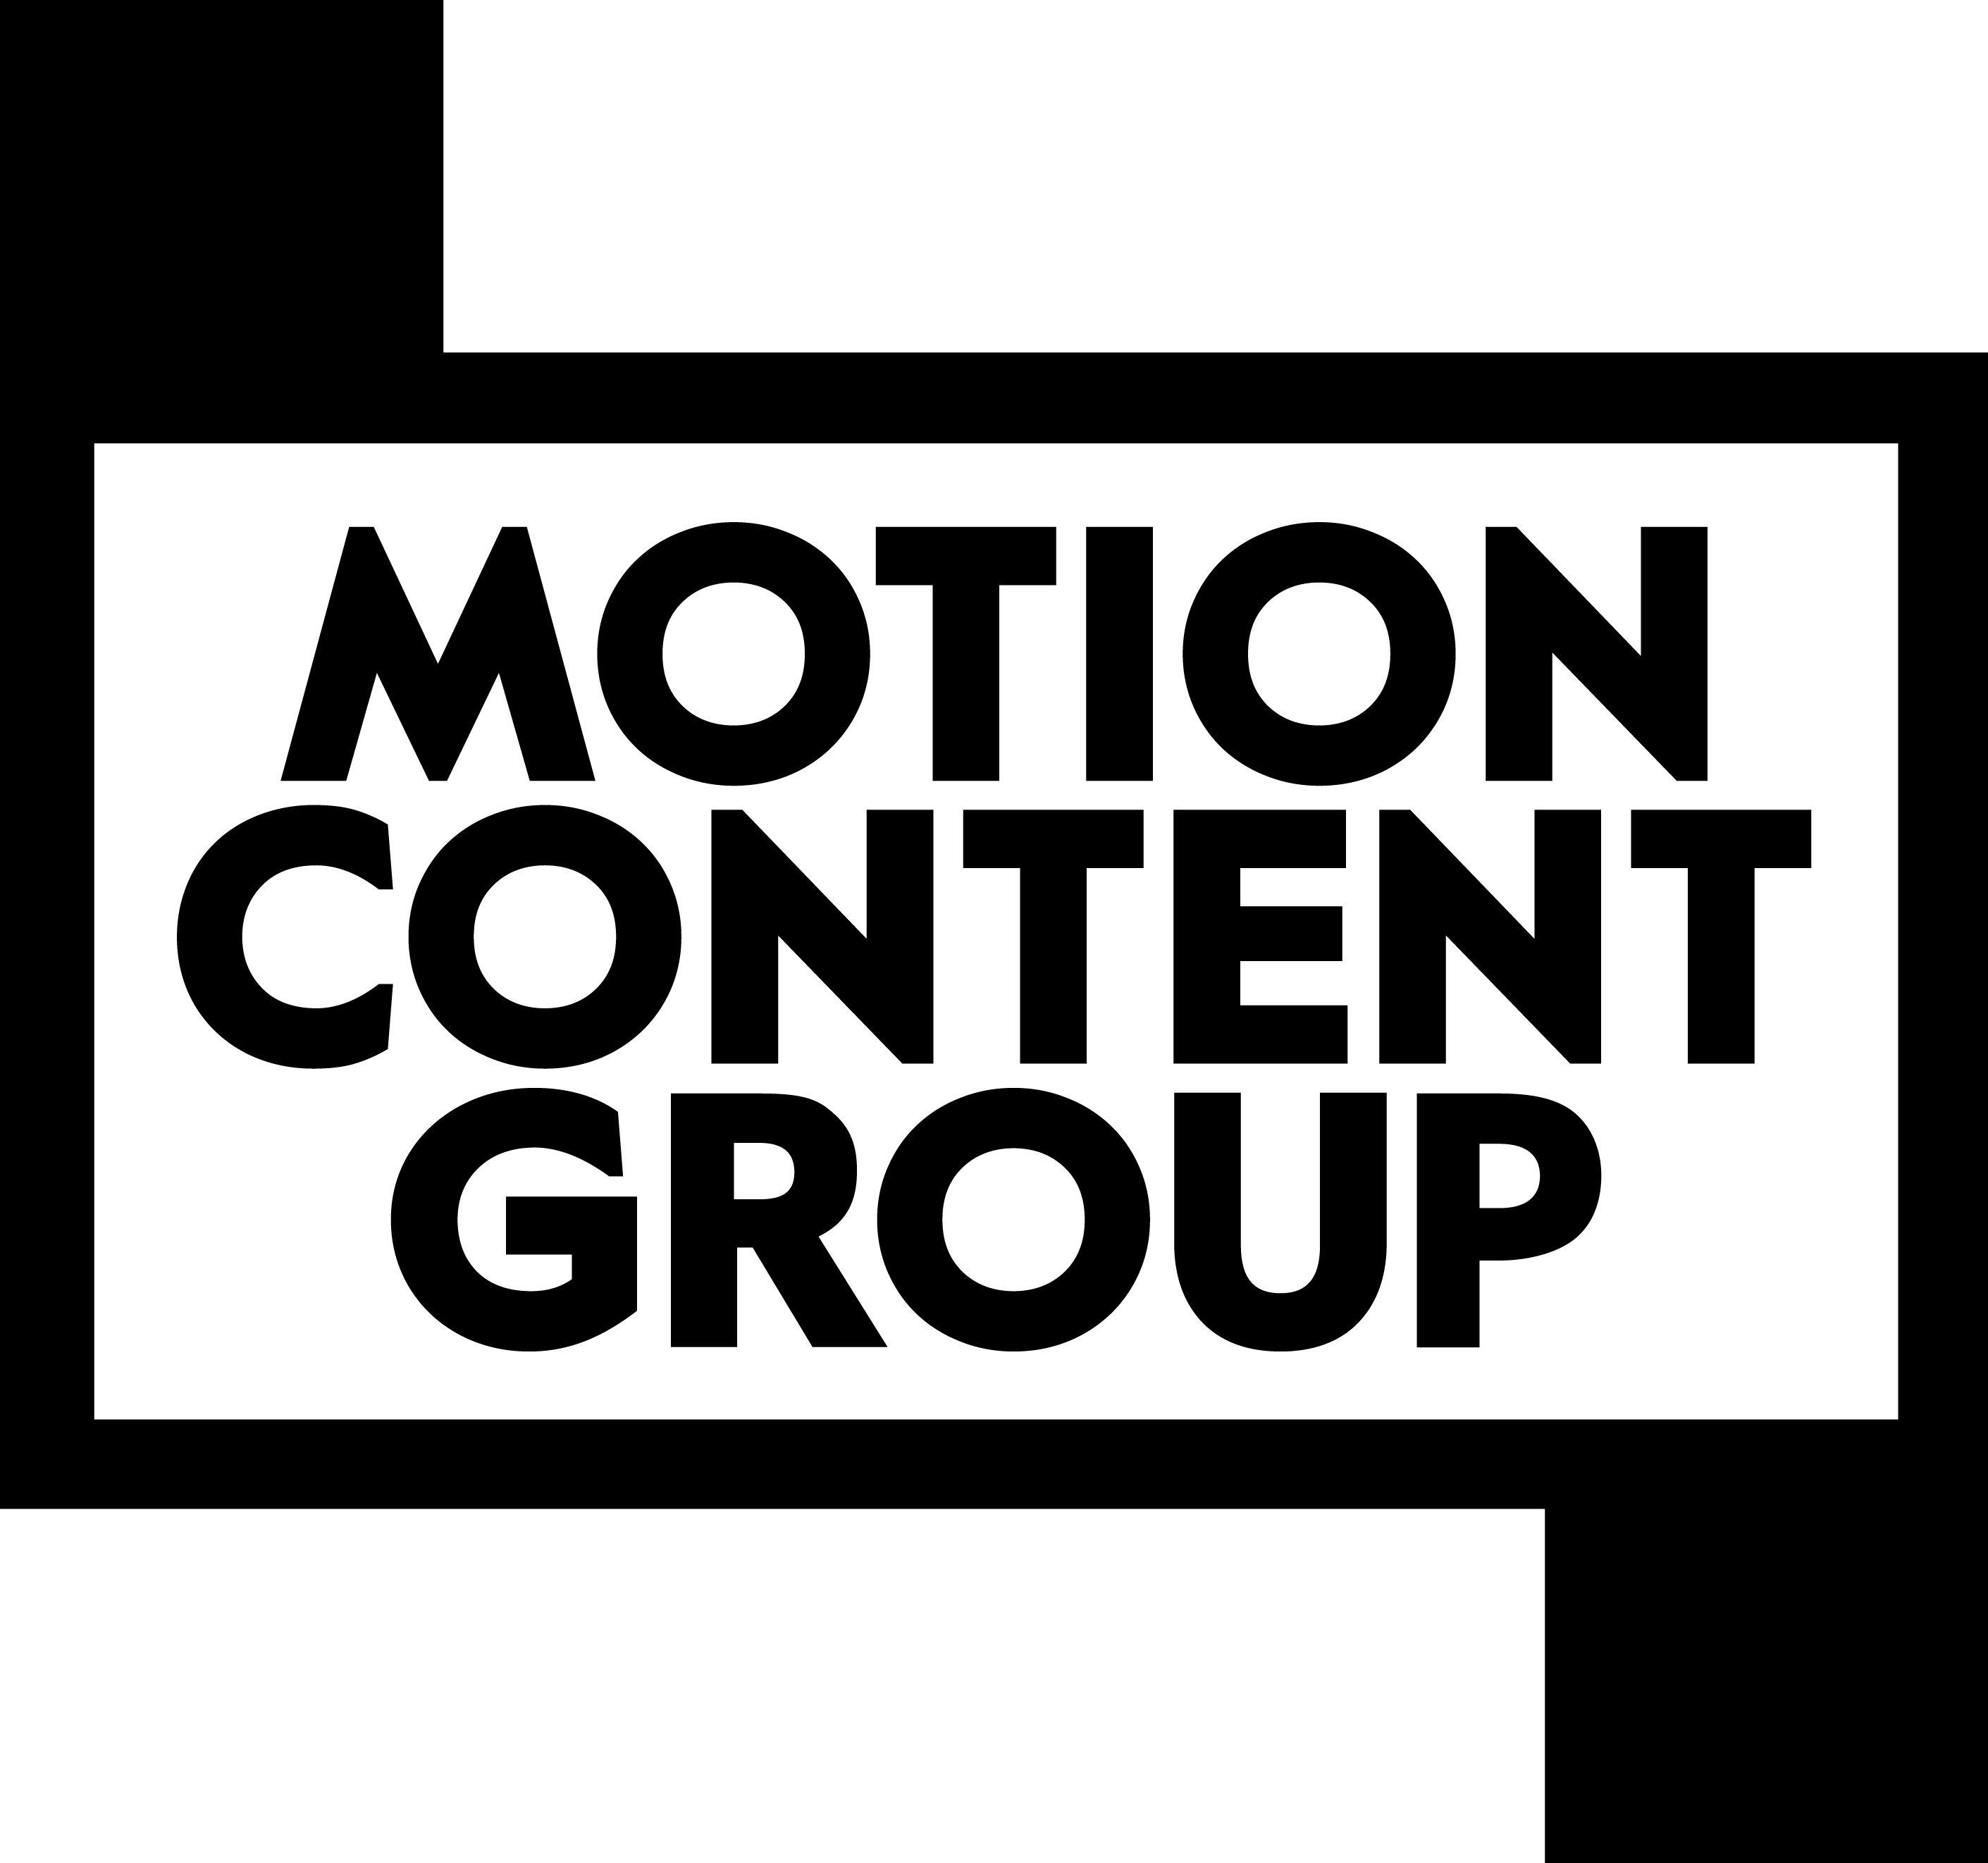 GroupM Logo - File:Motion Content Group.jpeg